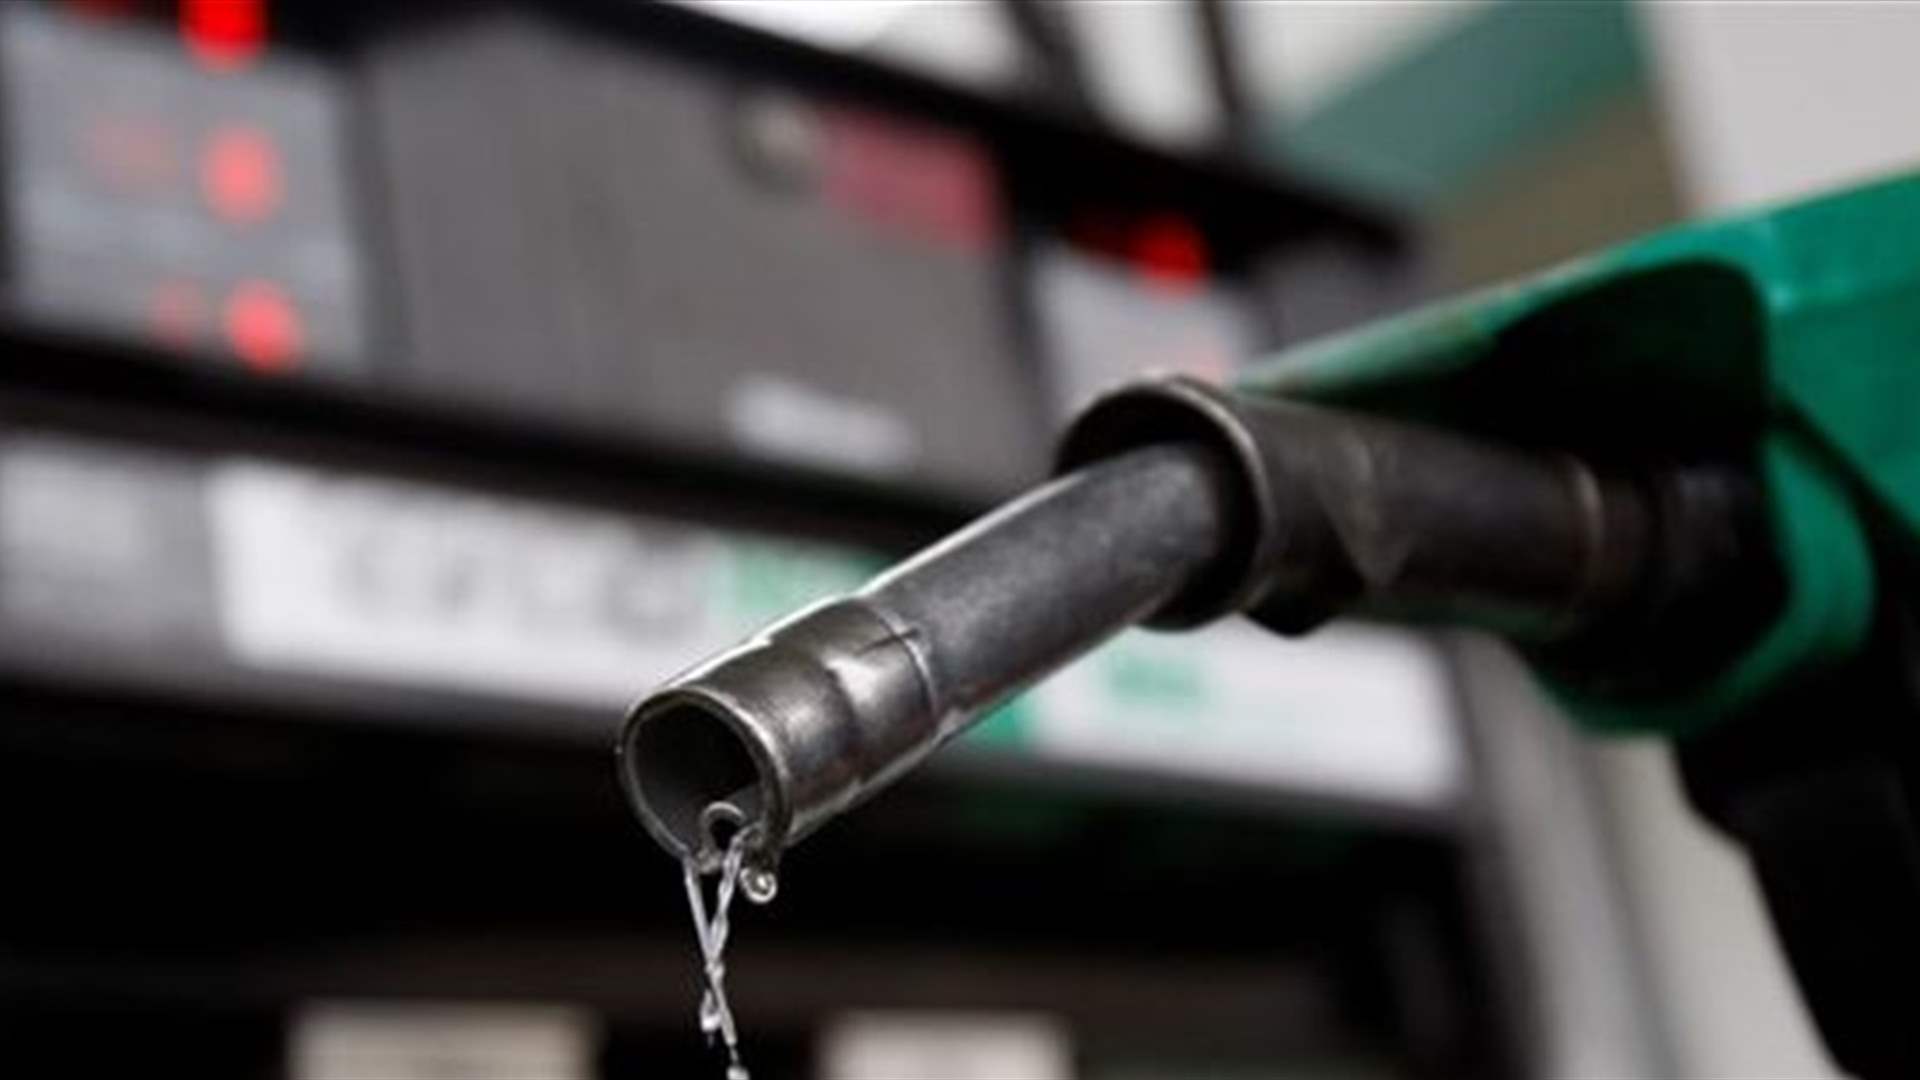 Fuel prices rise across Lebanon - Lebanon News